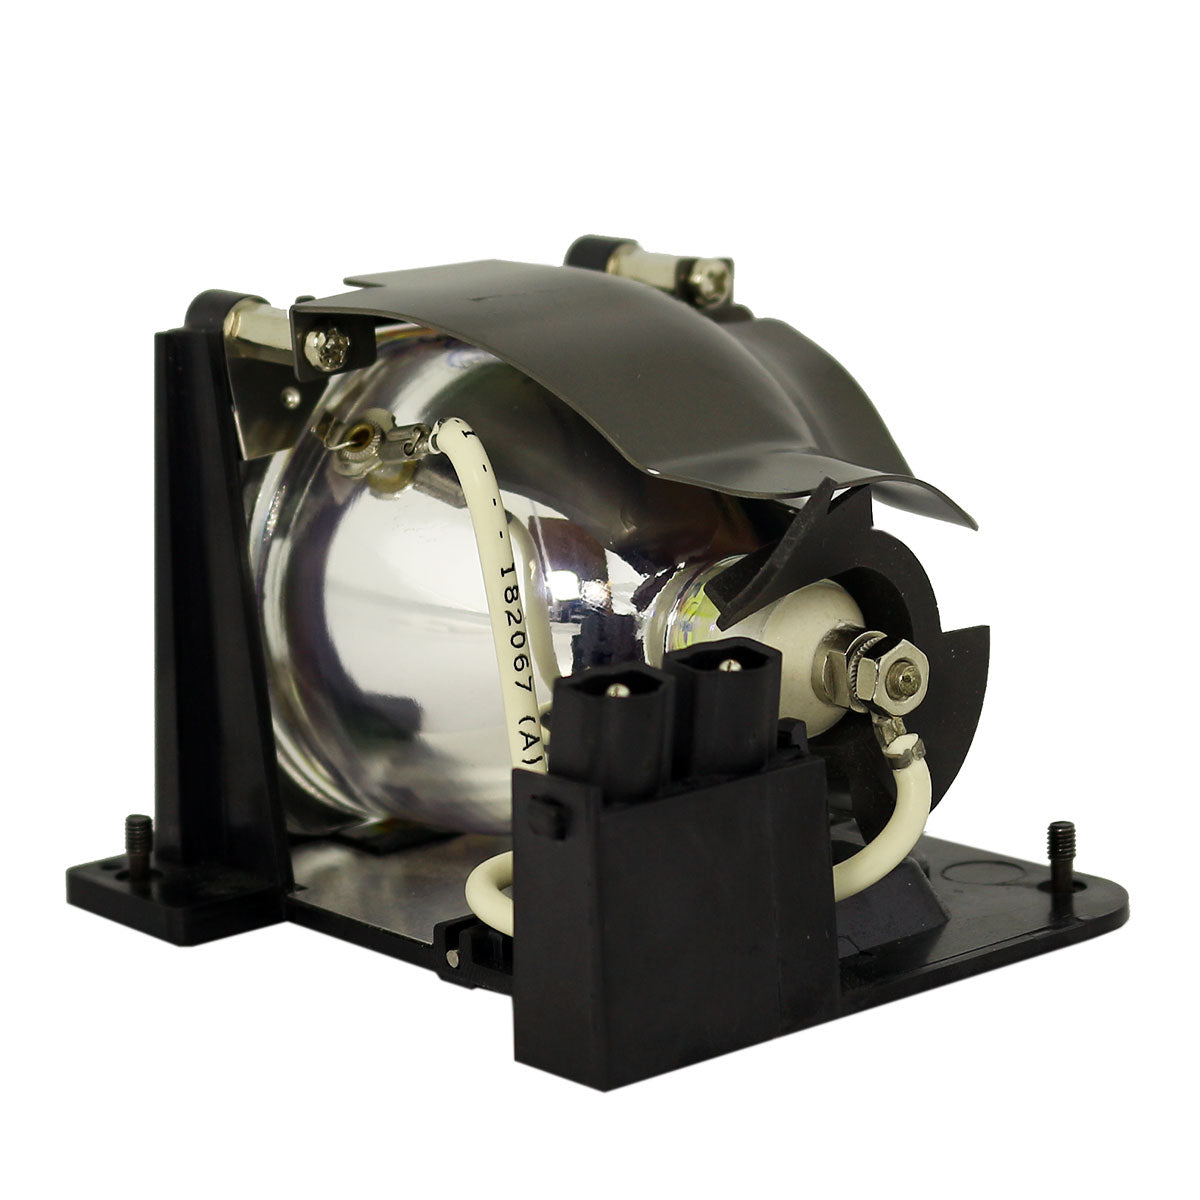 NOBO SP.86701.001 Osram Projector Lamp Module